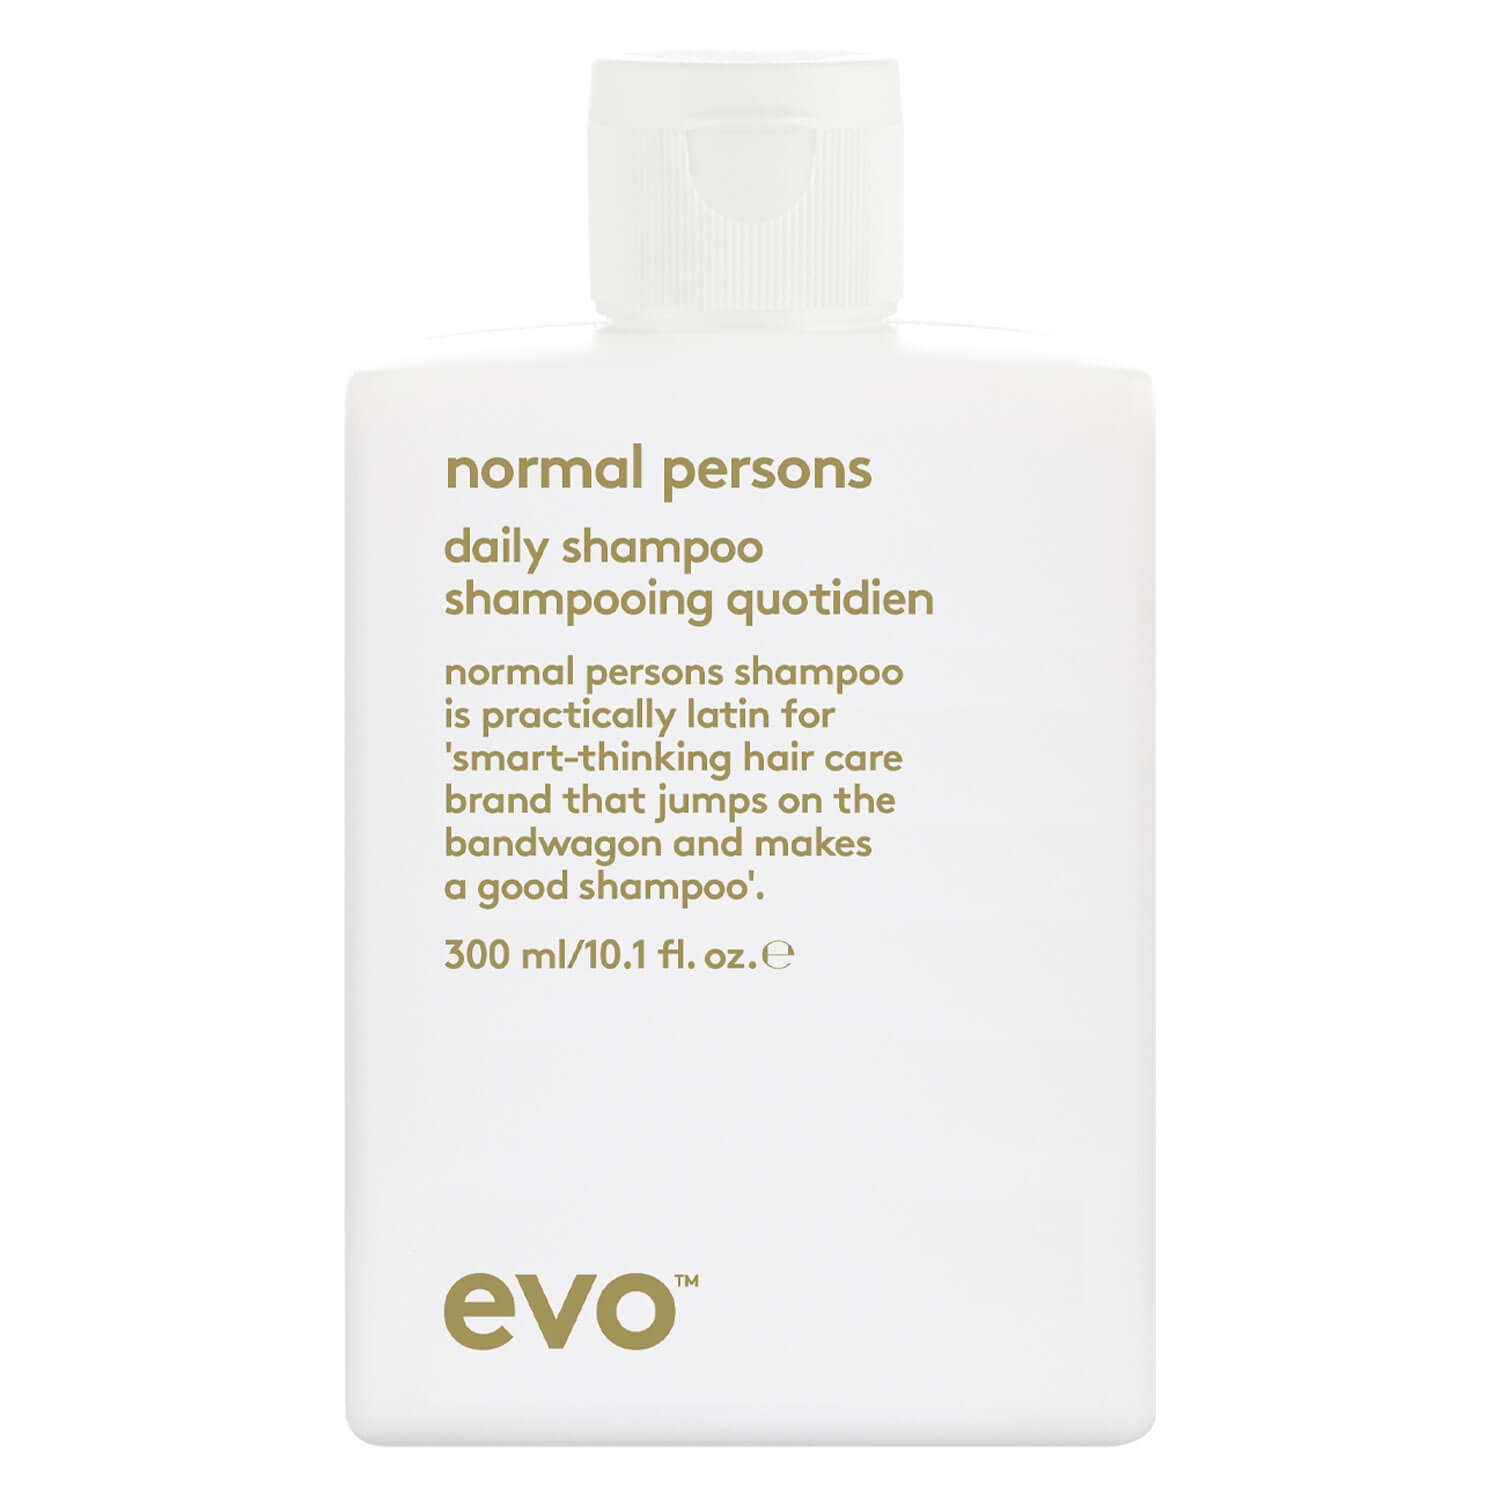 Produktbild von evo care - normal persons daily shampoo